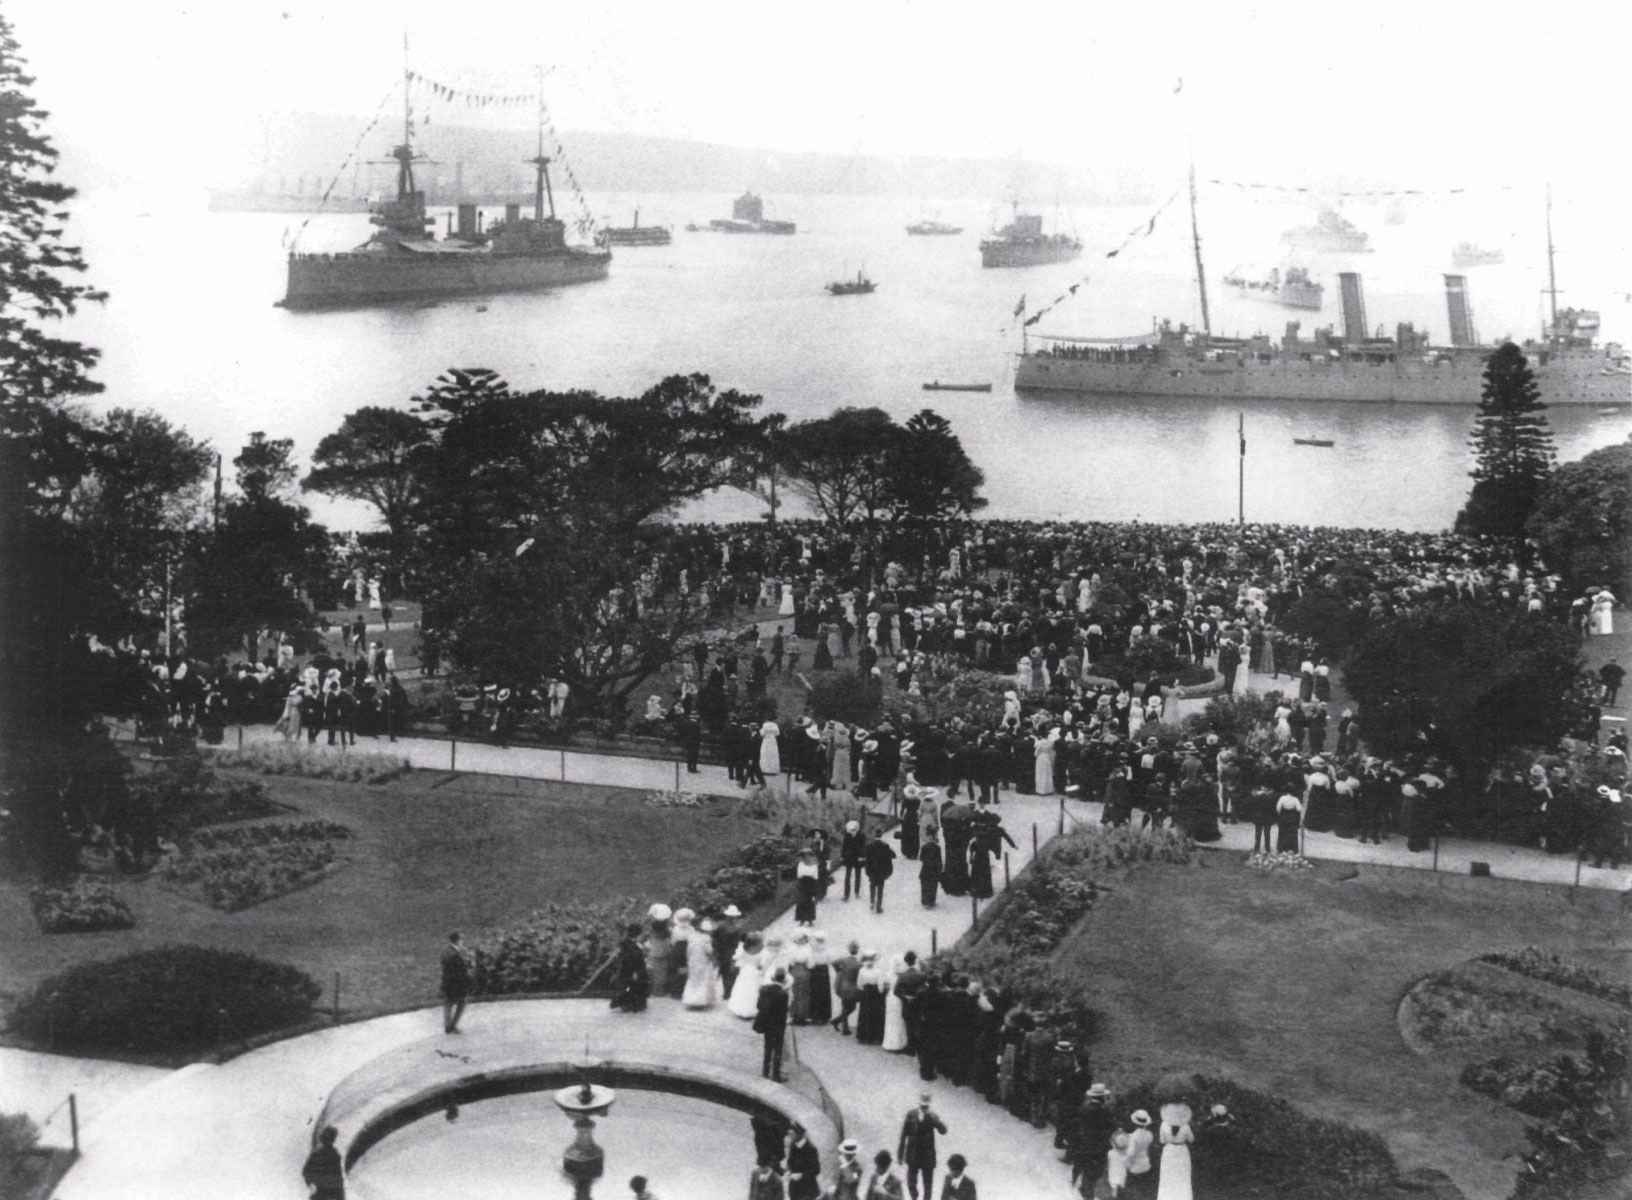 The new Royal Australian Navy ‘fleet unit’ moored in Sydney Harbour, 4 October 1913.